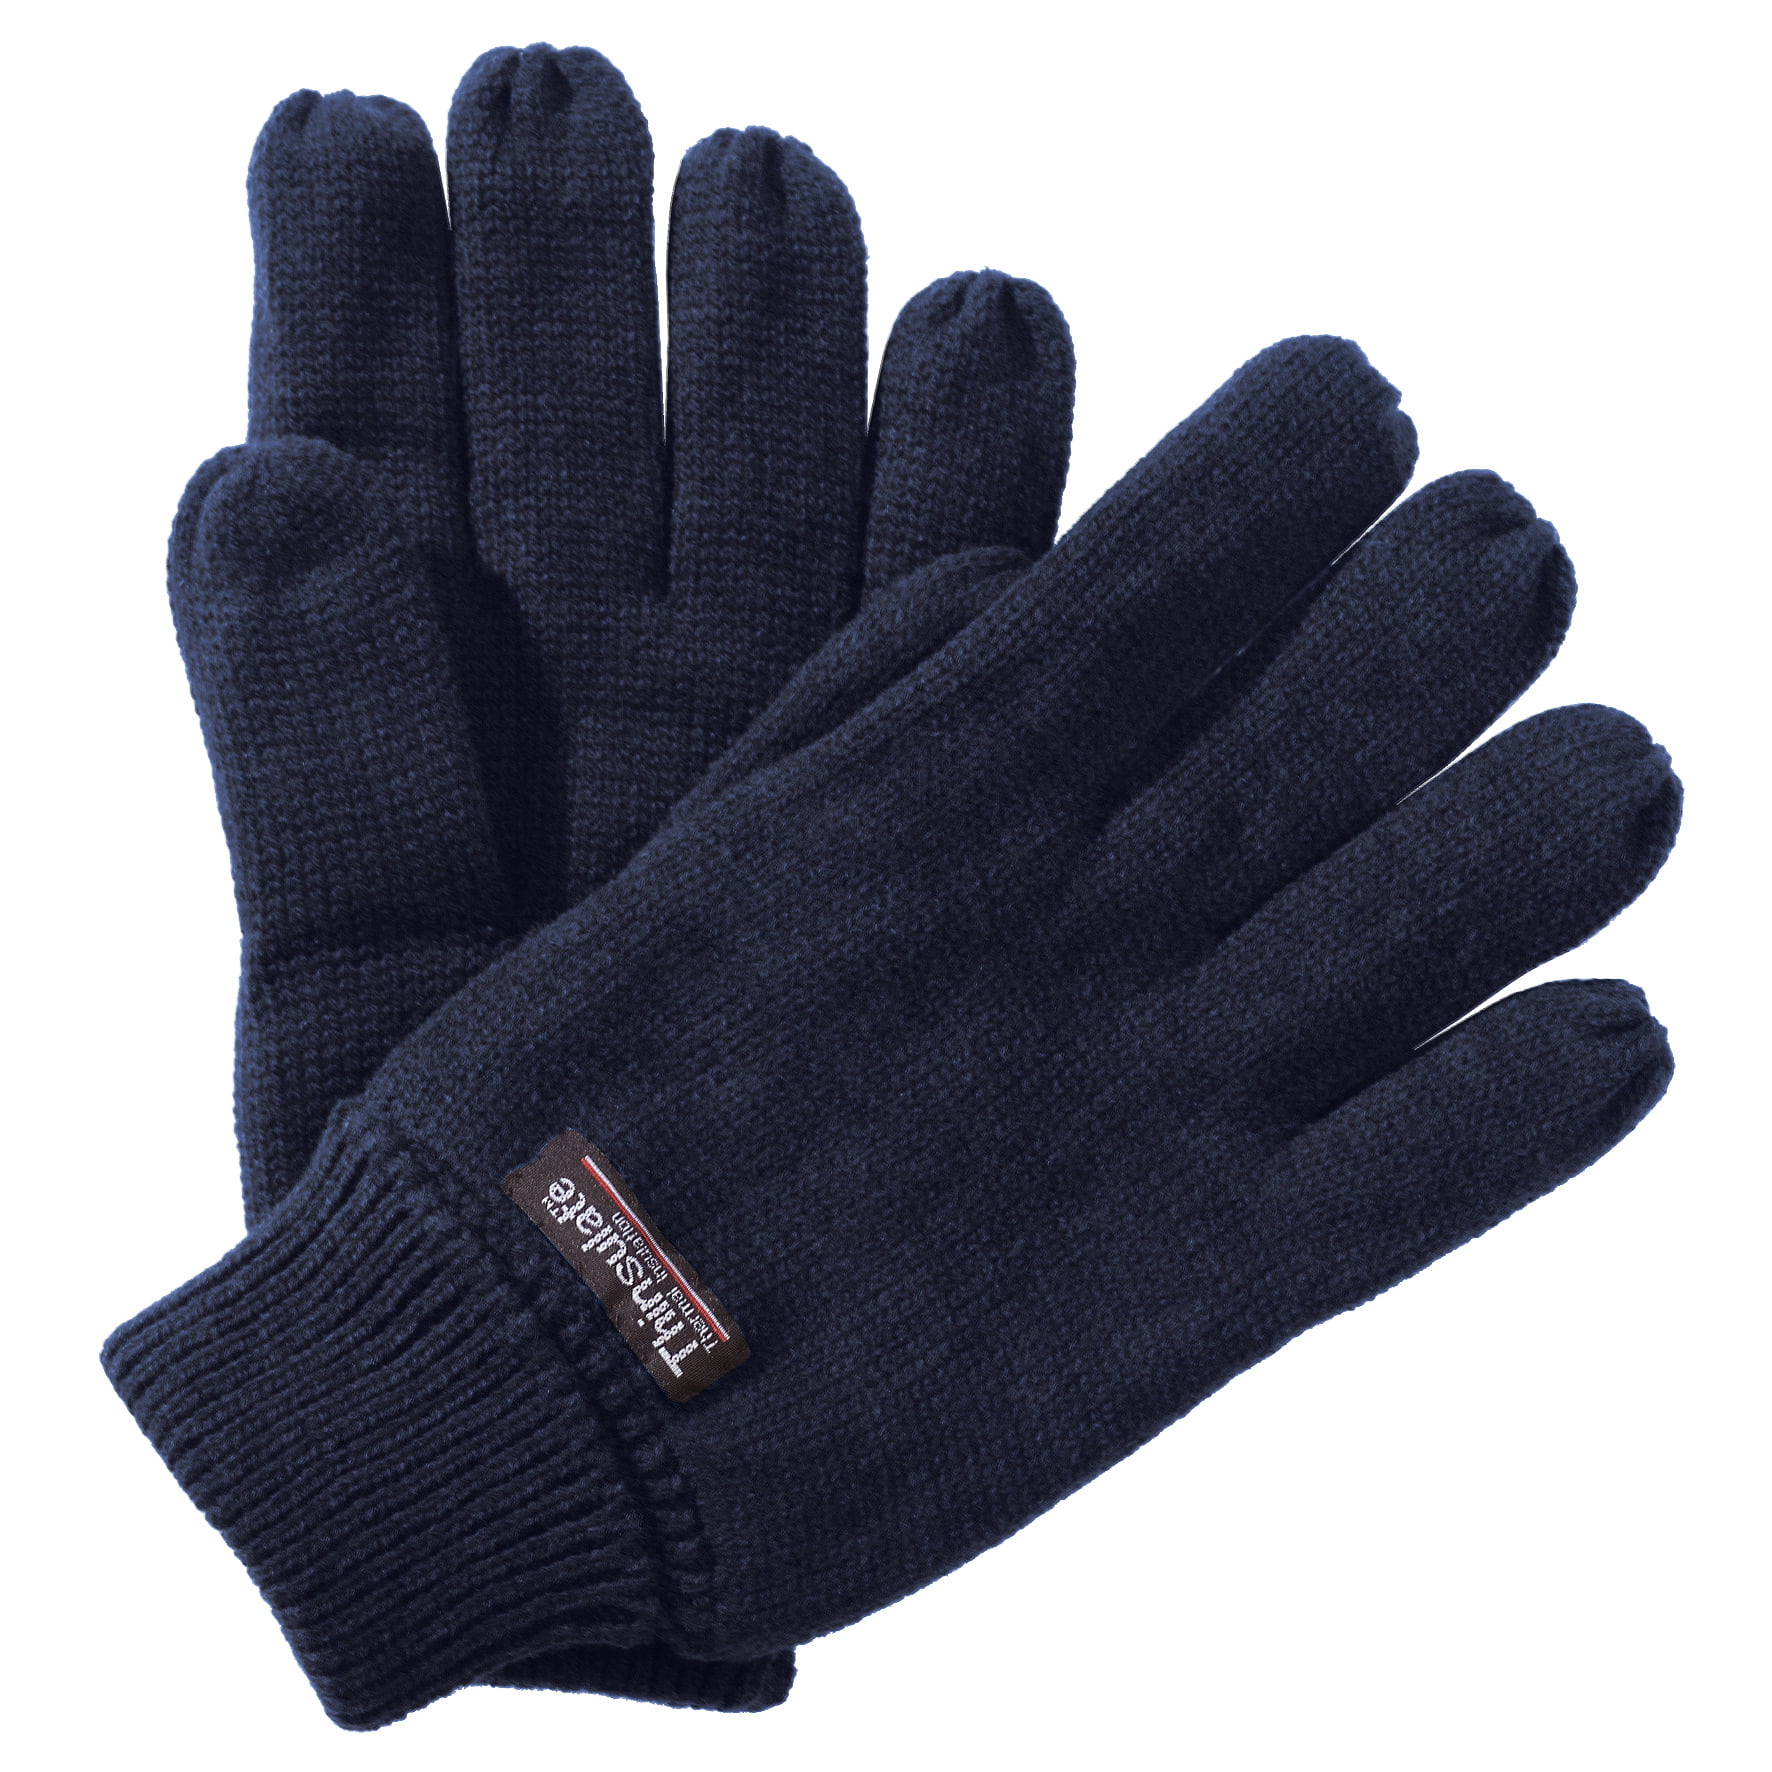 Regatta Men's Thinsulate Fleece Gloves